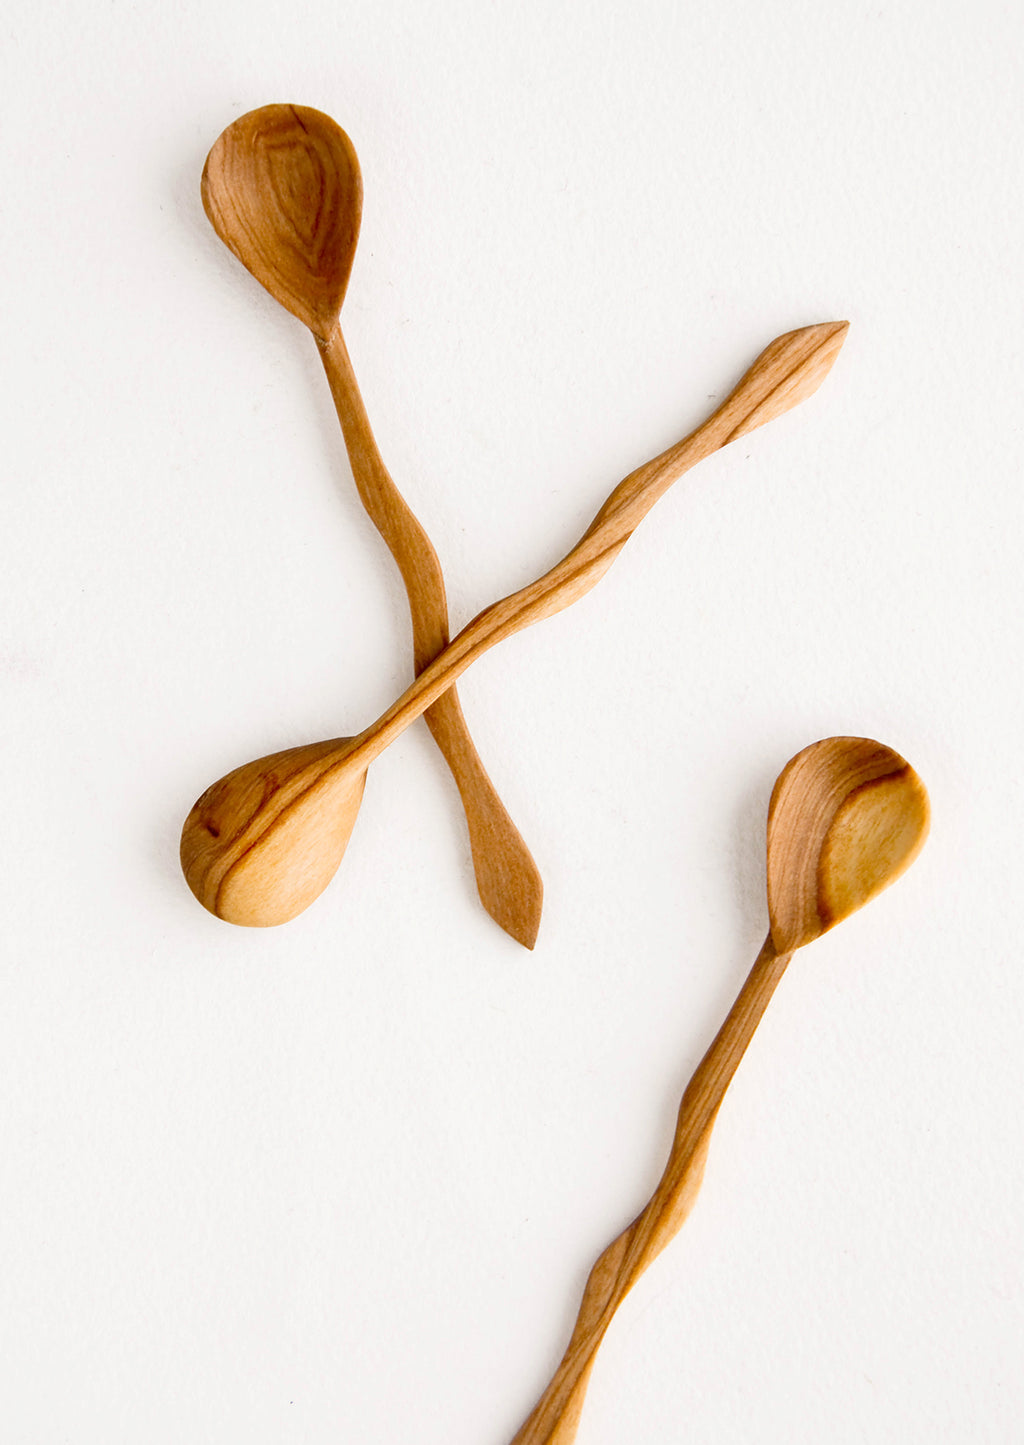 Teaspoon: Wooden teaspoons with wavy hand-carved handles